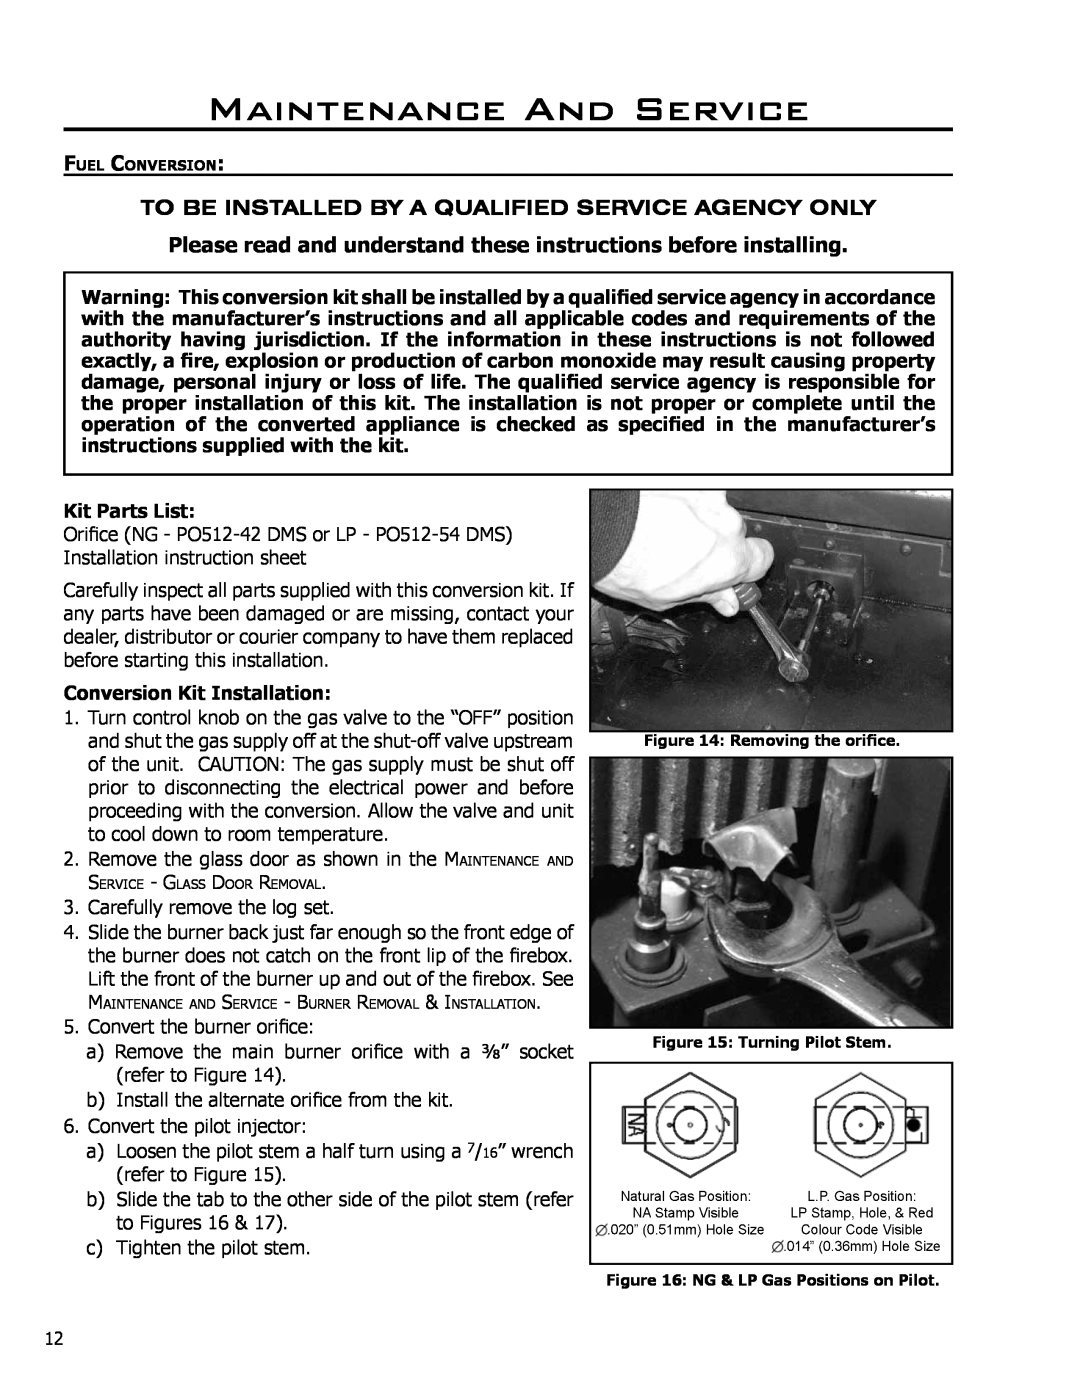 Enviro C-11500 owner manual Maintenance And Service, Kit Parts List 